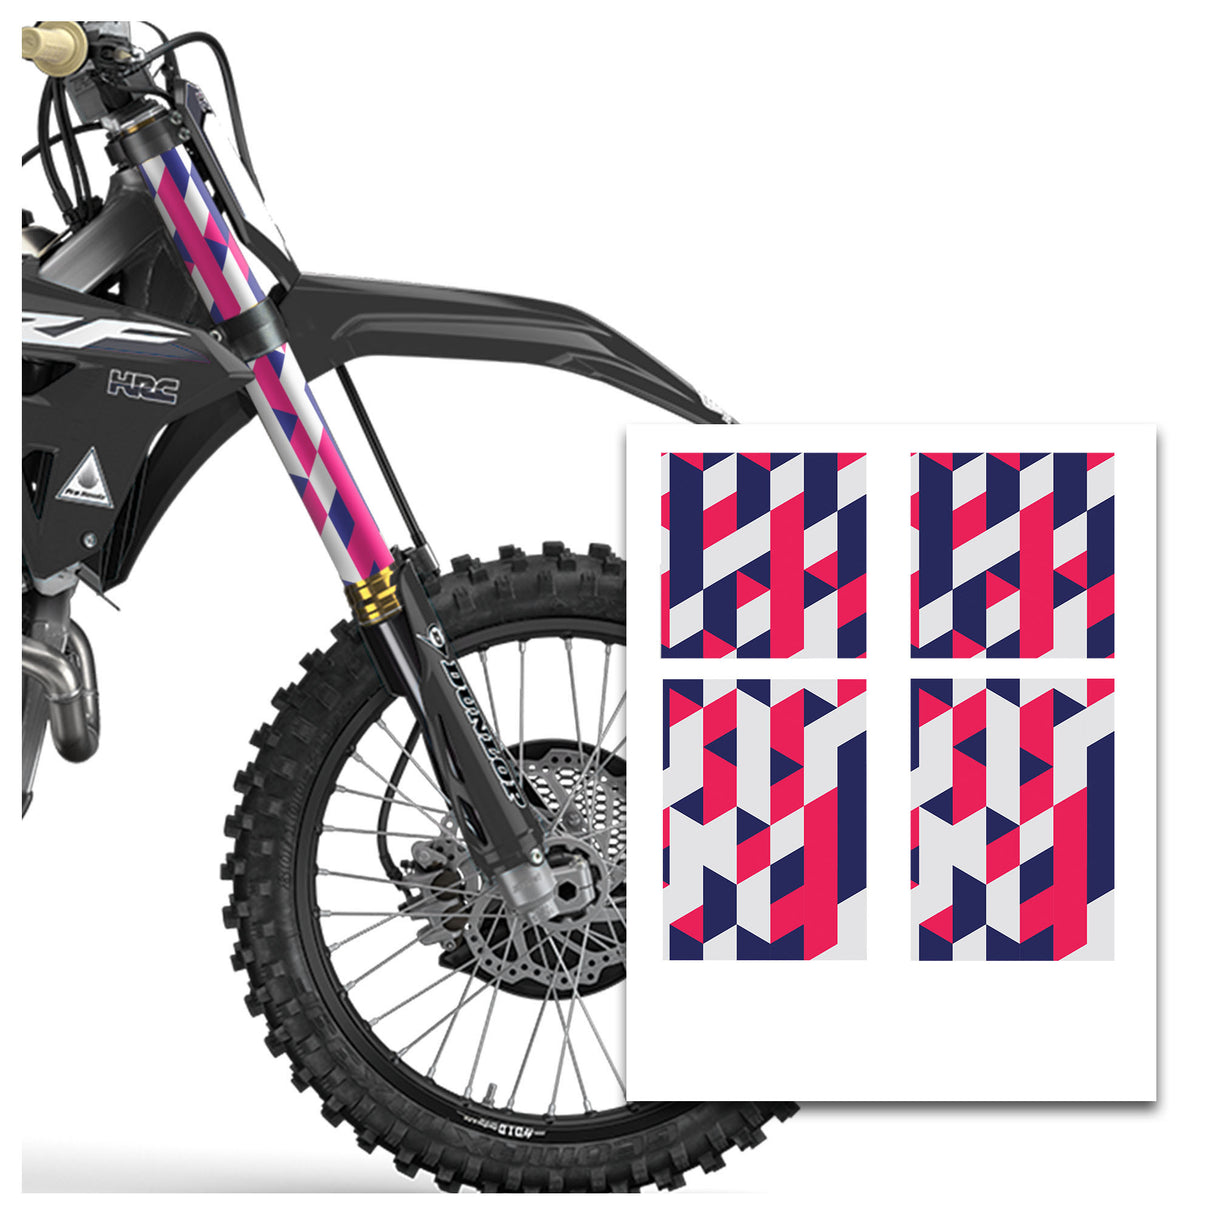 MX Drit Bike Front Fork Wrap Sticker Protection For Honda Yamaha Kawaski Suzuki [TT44 Trapezoidal] - StickerBao Wheel Sticker Store